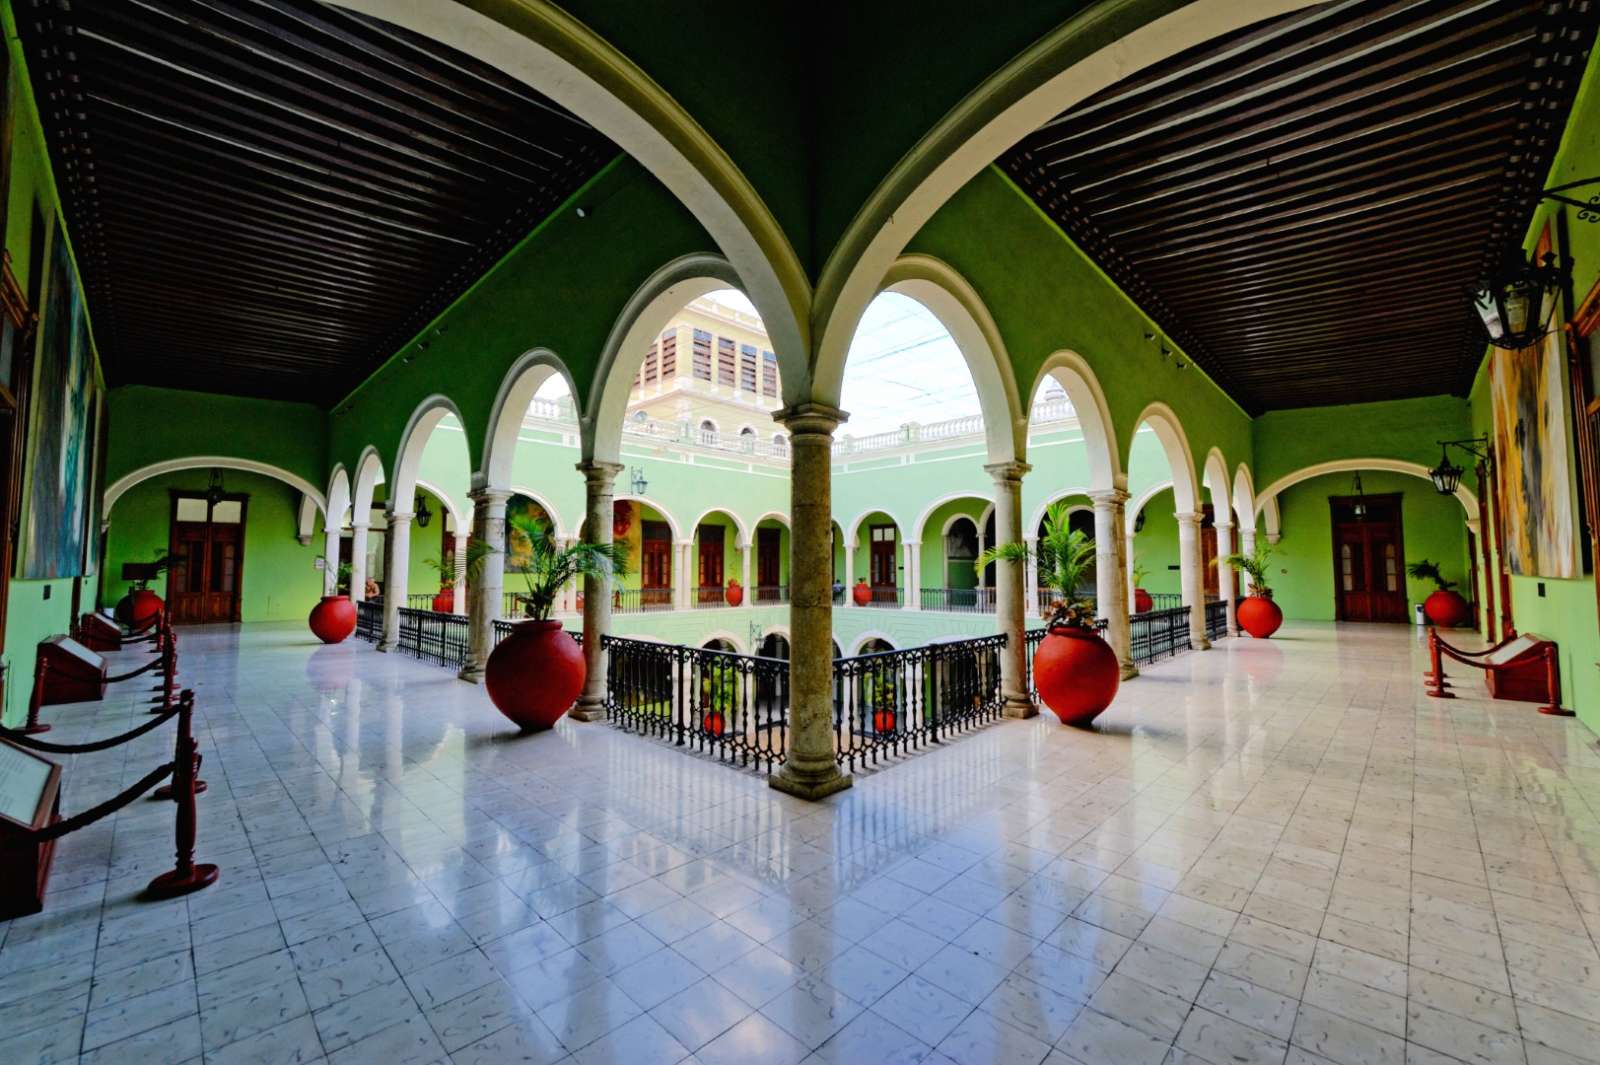 Governor's palace museum in Merida, Yucatan